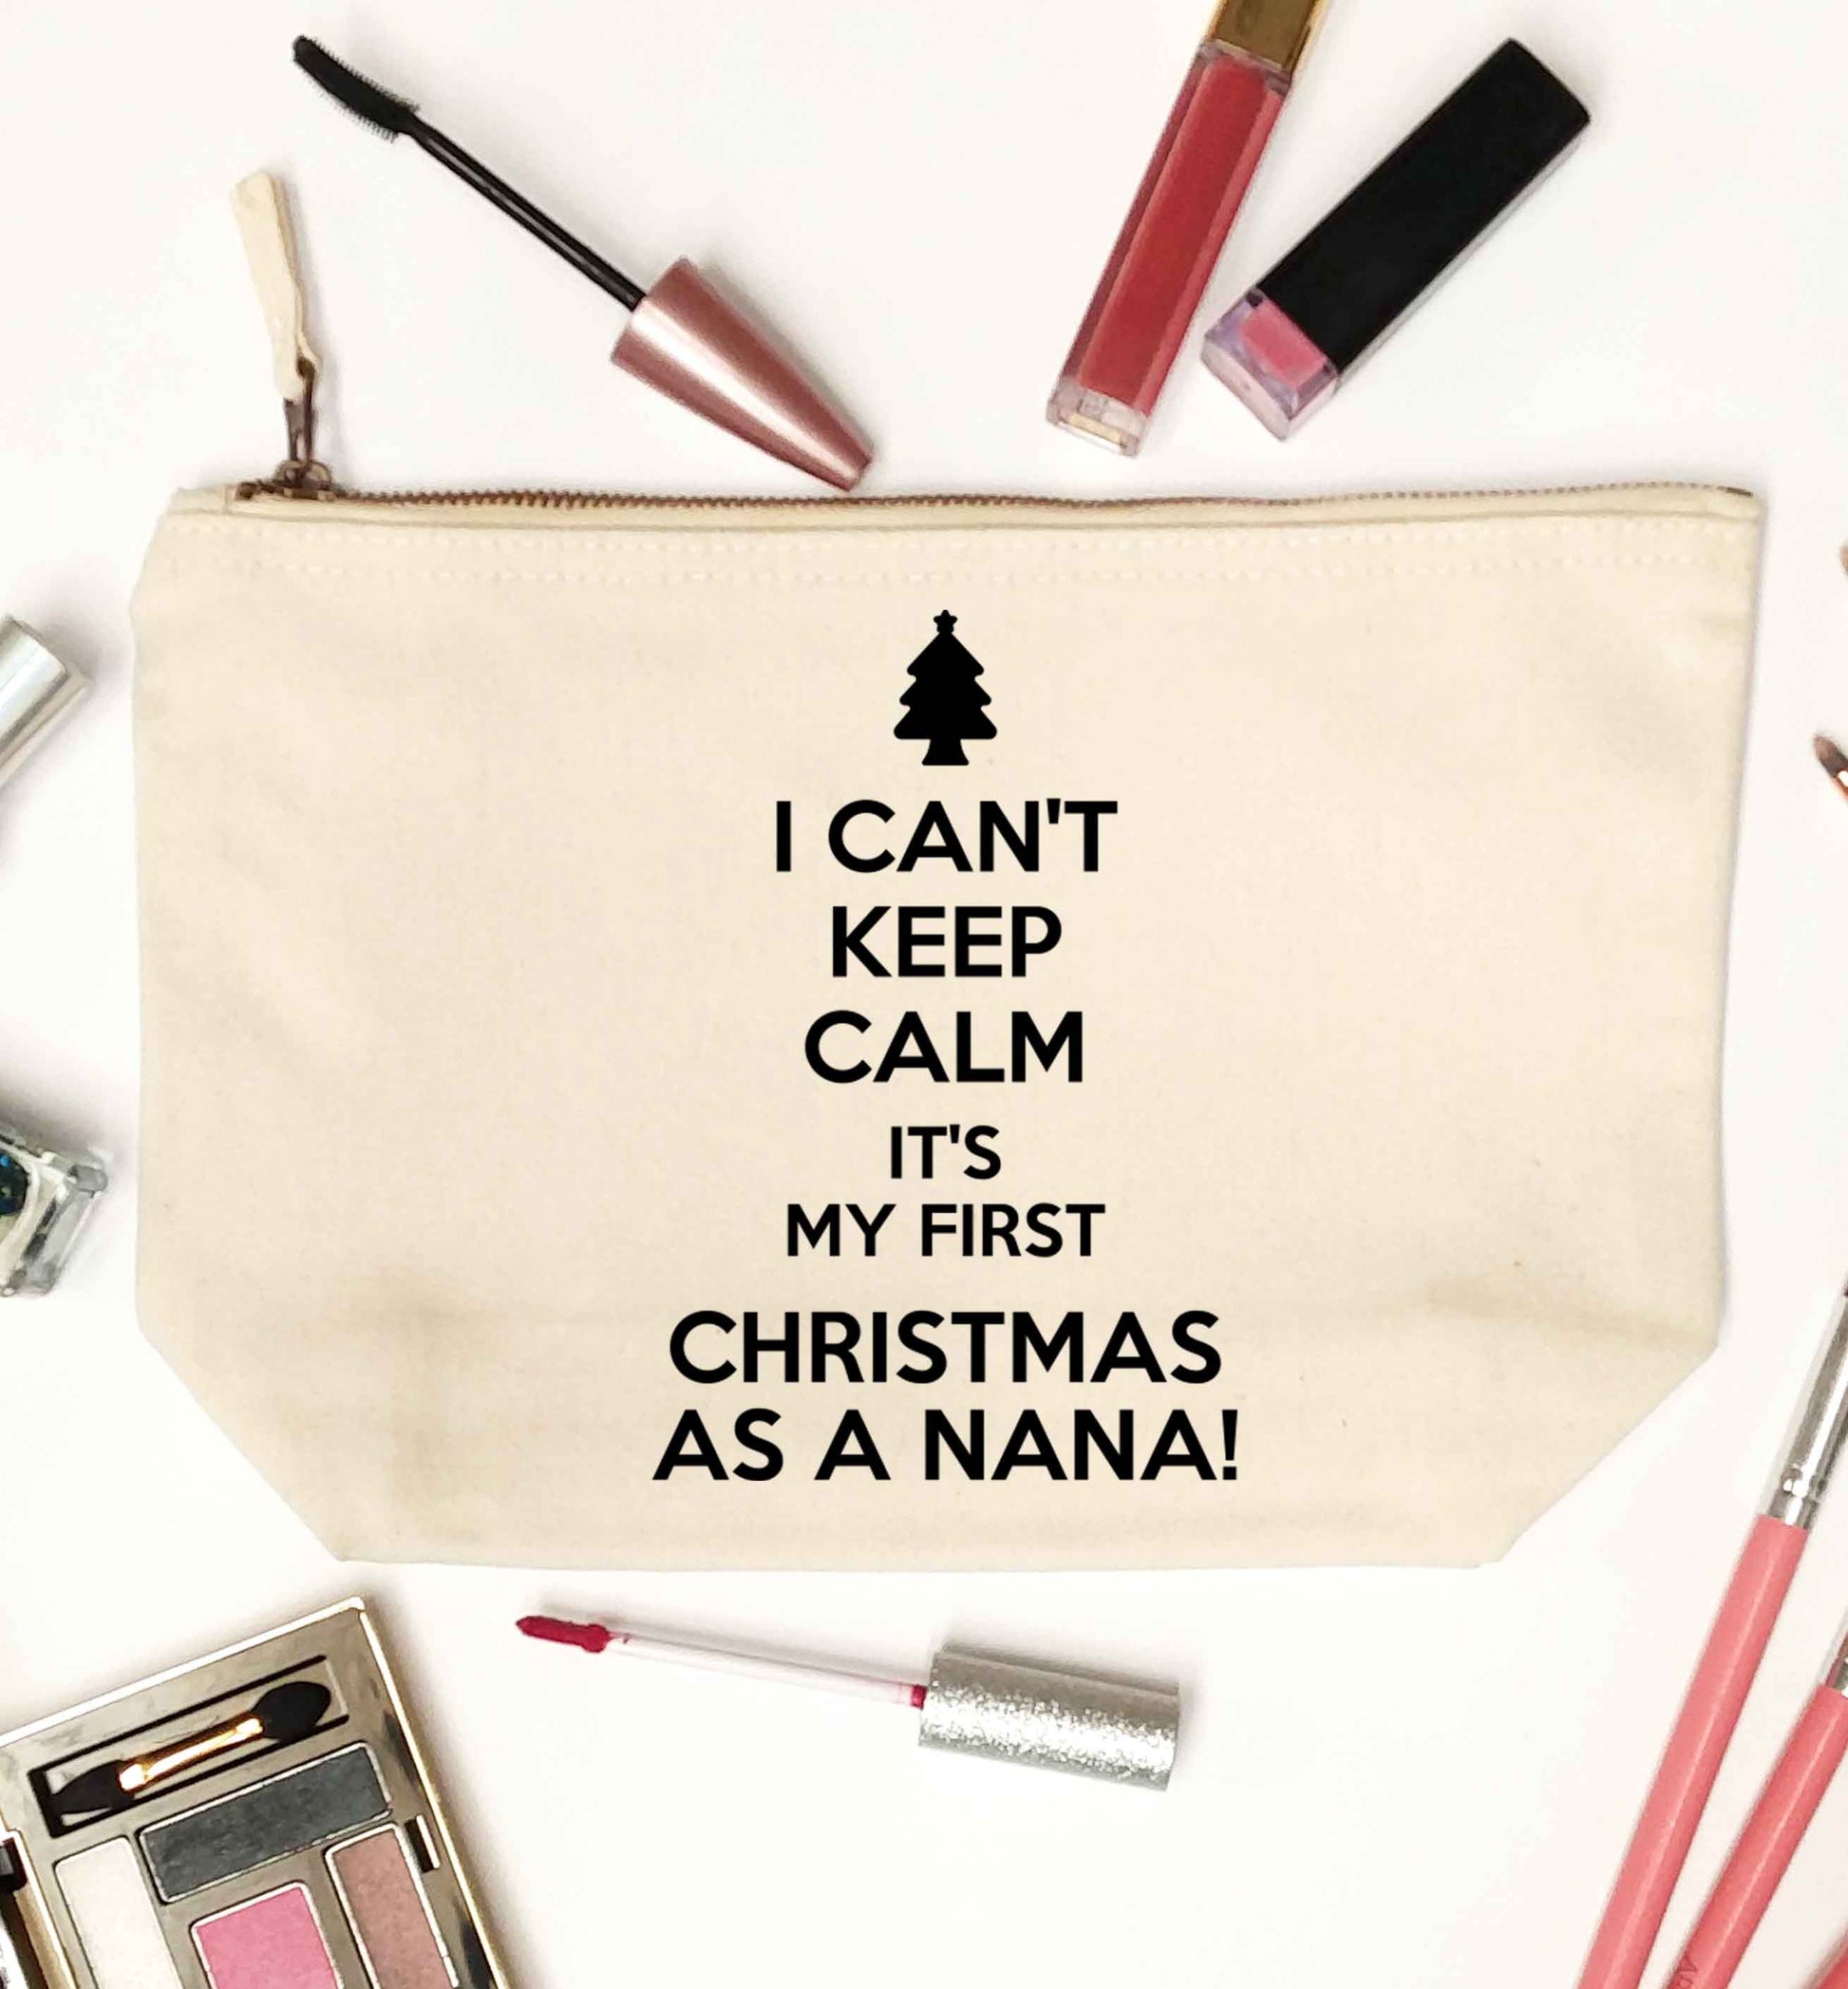 I can't keep calm it's my first Christmas as a nana! natural makeup bag